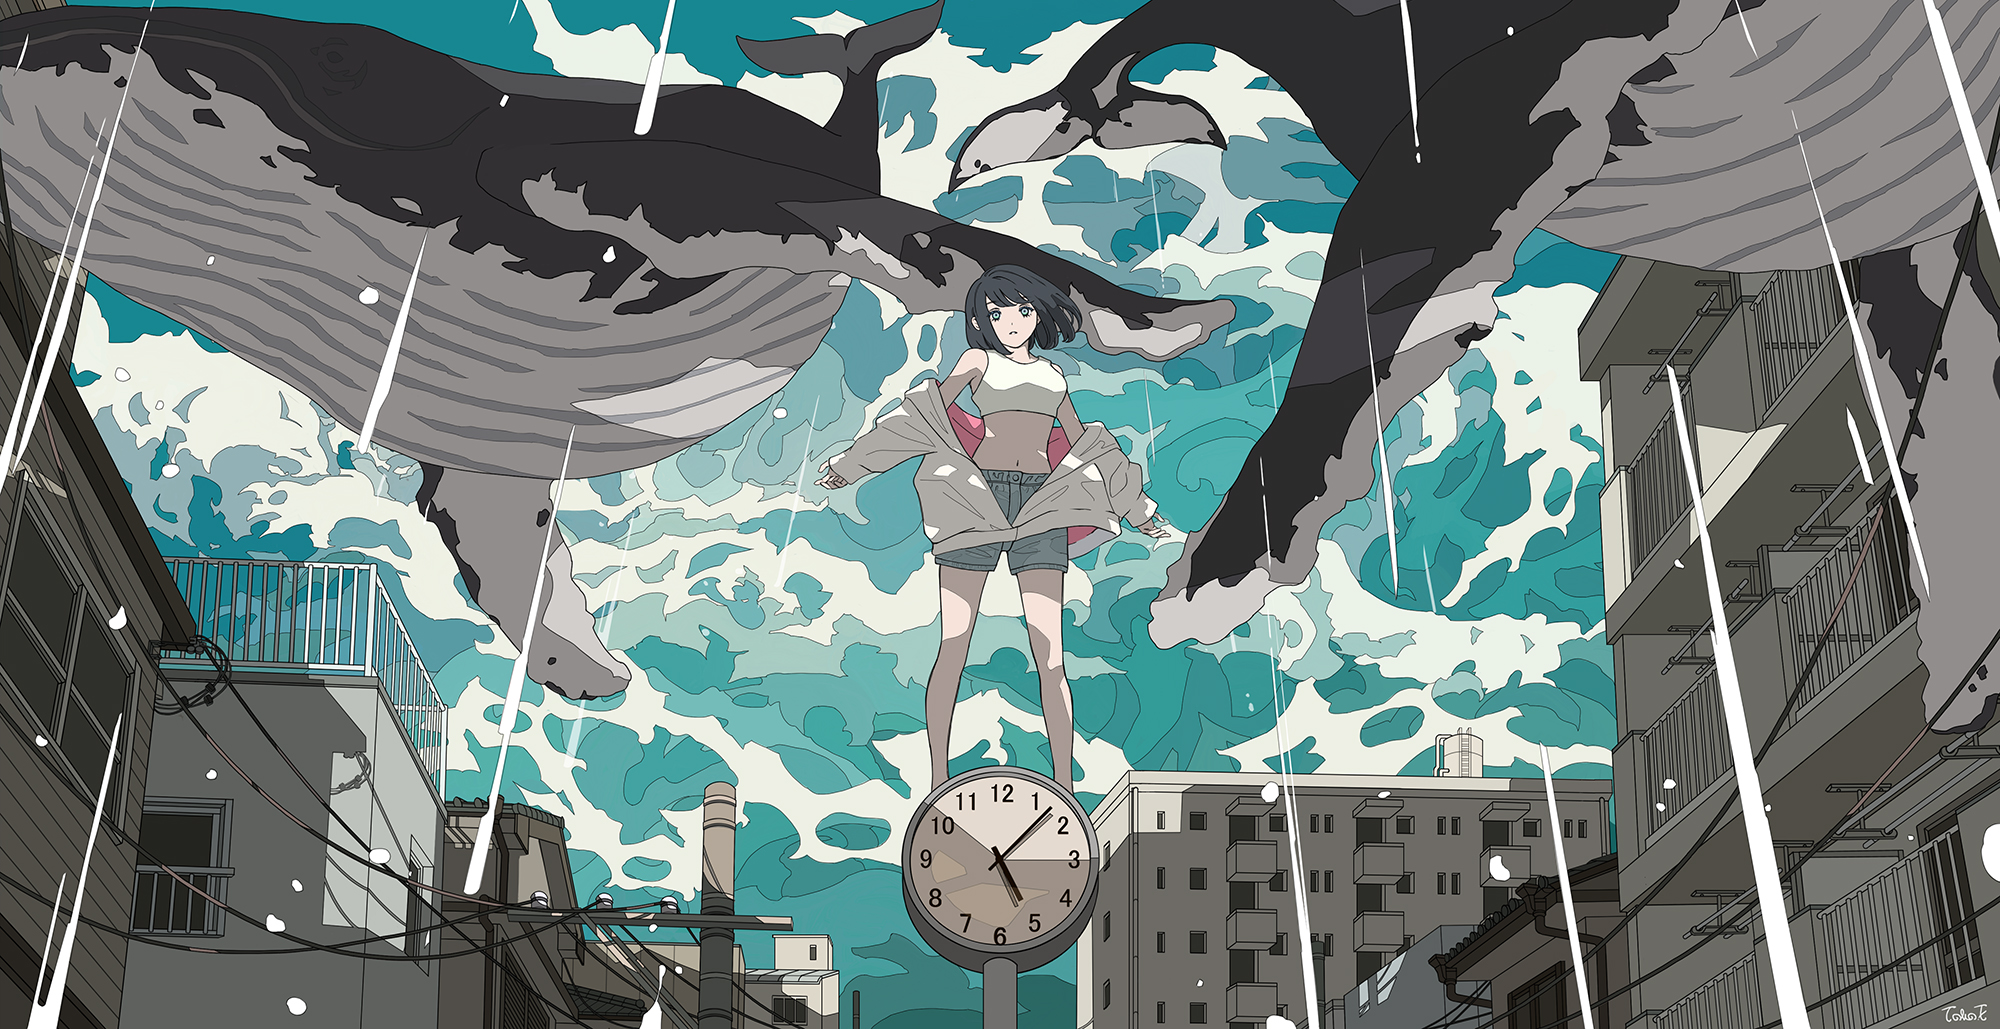 Underwater - Other & Anime Background Wallpapers on Desktop Nexus (Image  721471)